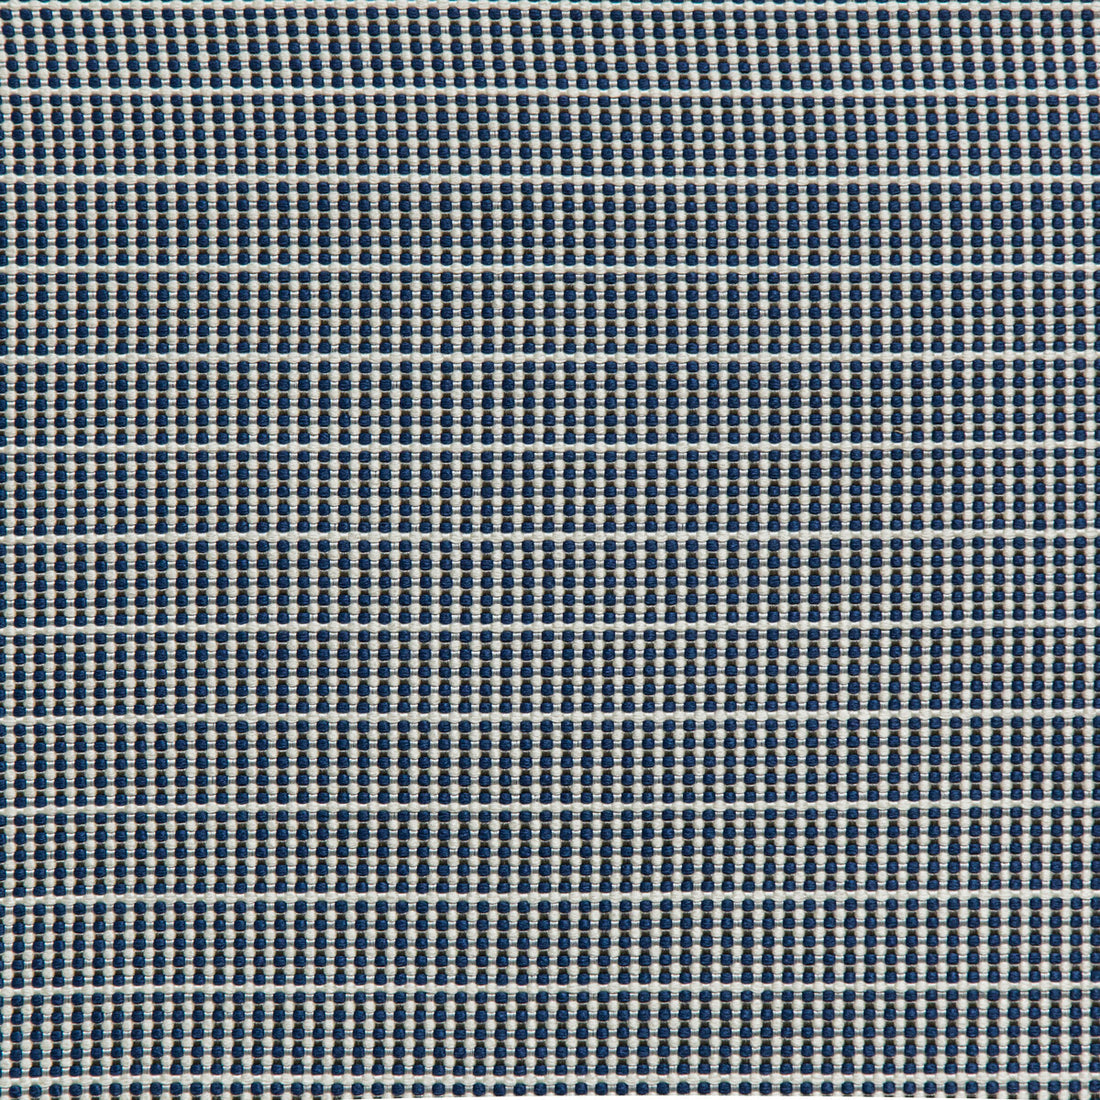 Portique fabric in indigo color - pattern 2019130.501.0 - by Lee Jofa